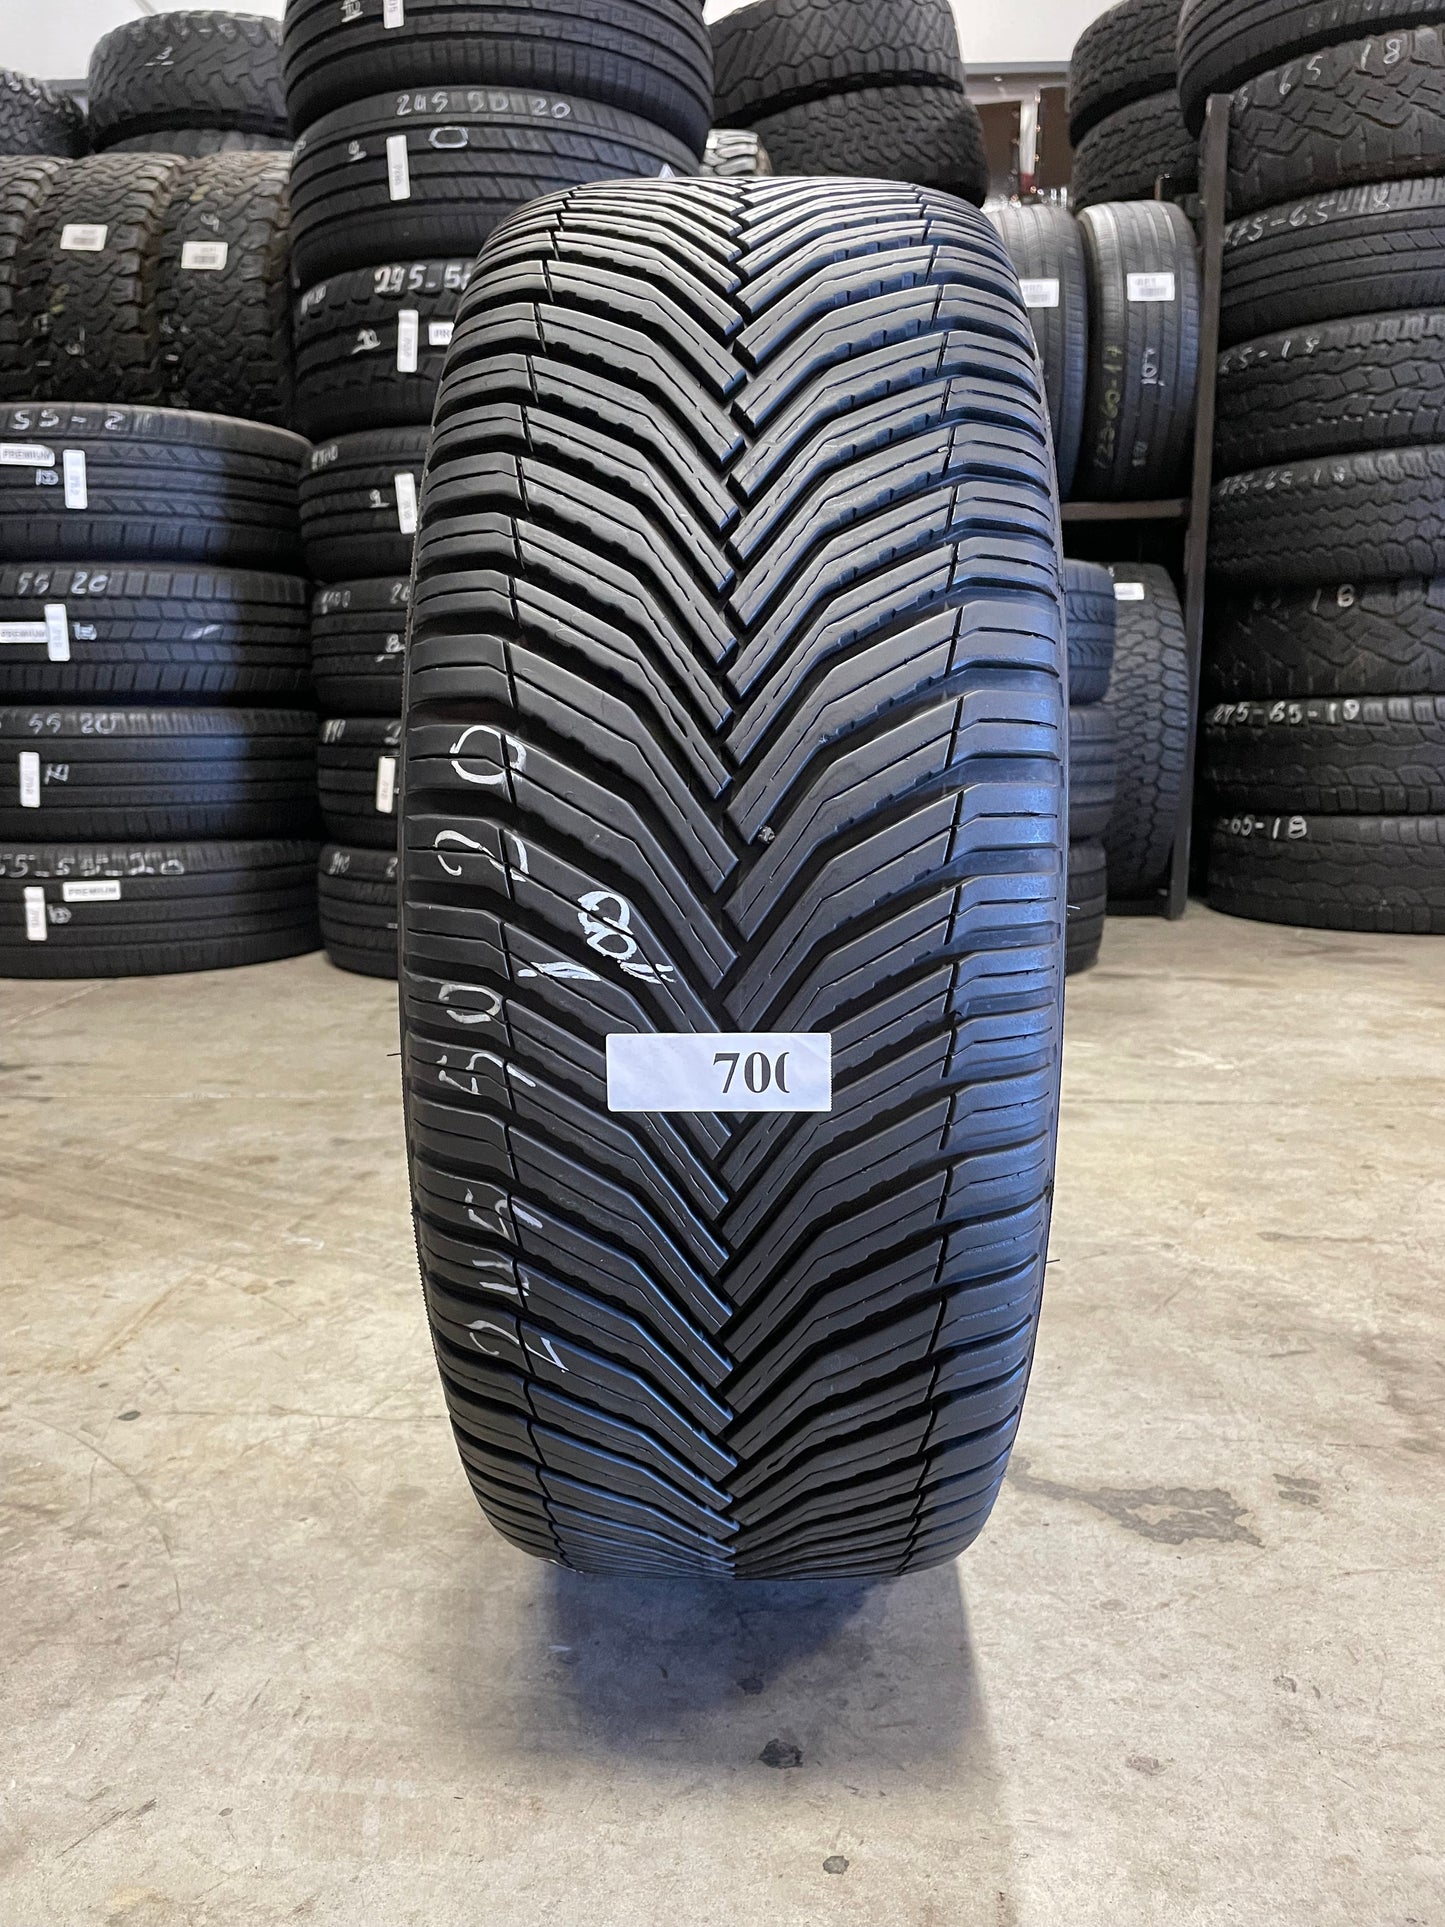 SINGLE 245/50R20 Michelin Cross climate 2 102 V SL - Premium Used Tires